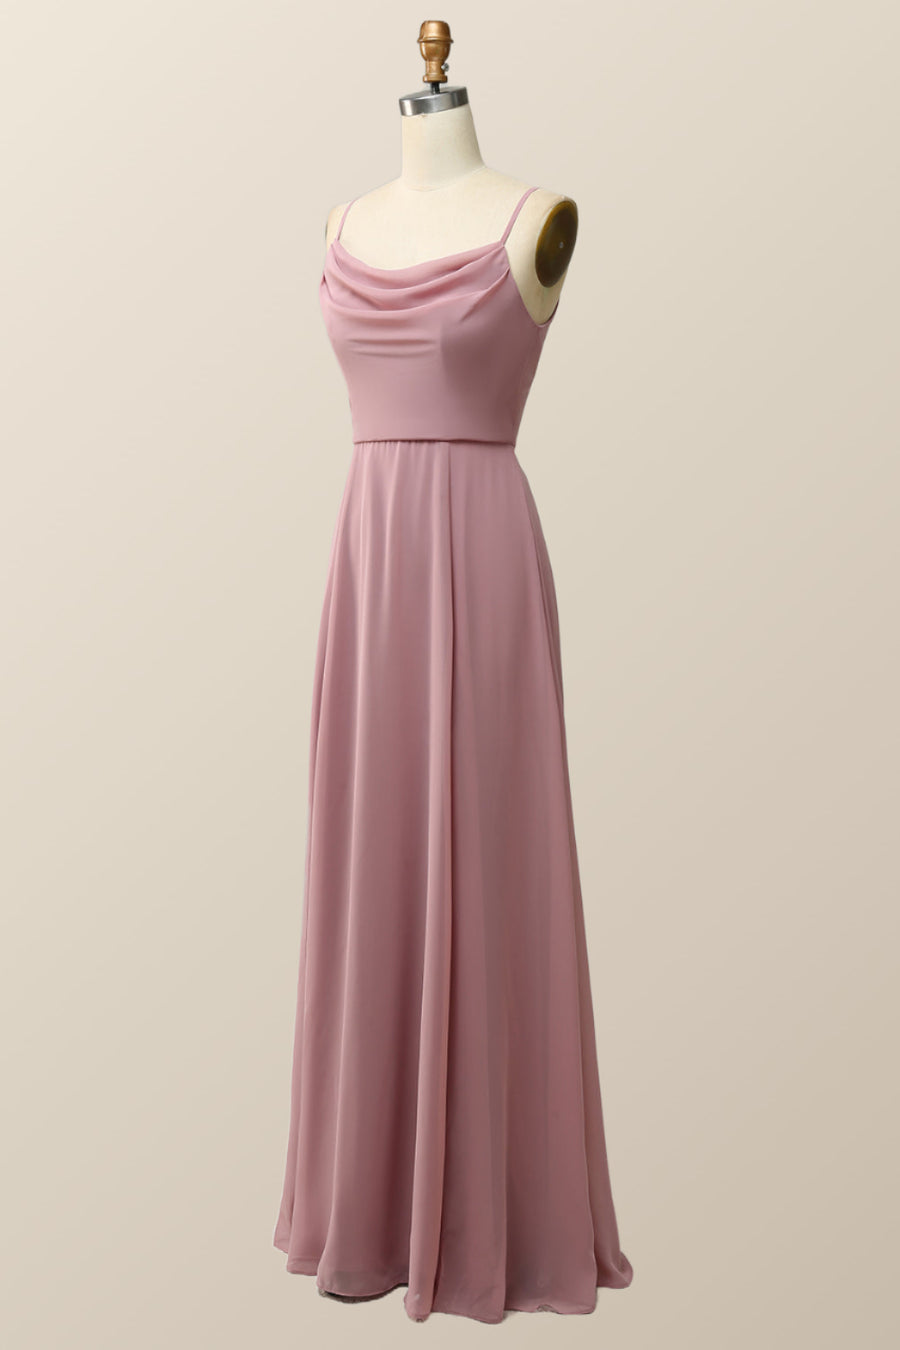 Blush Pink Cowl Neck Chiffon Long Bridesmaid Dress